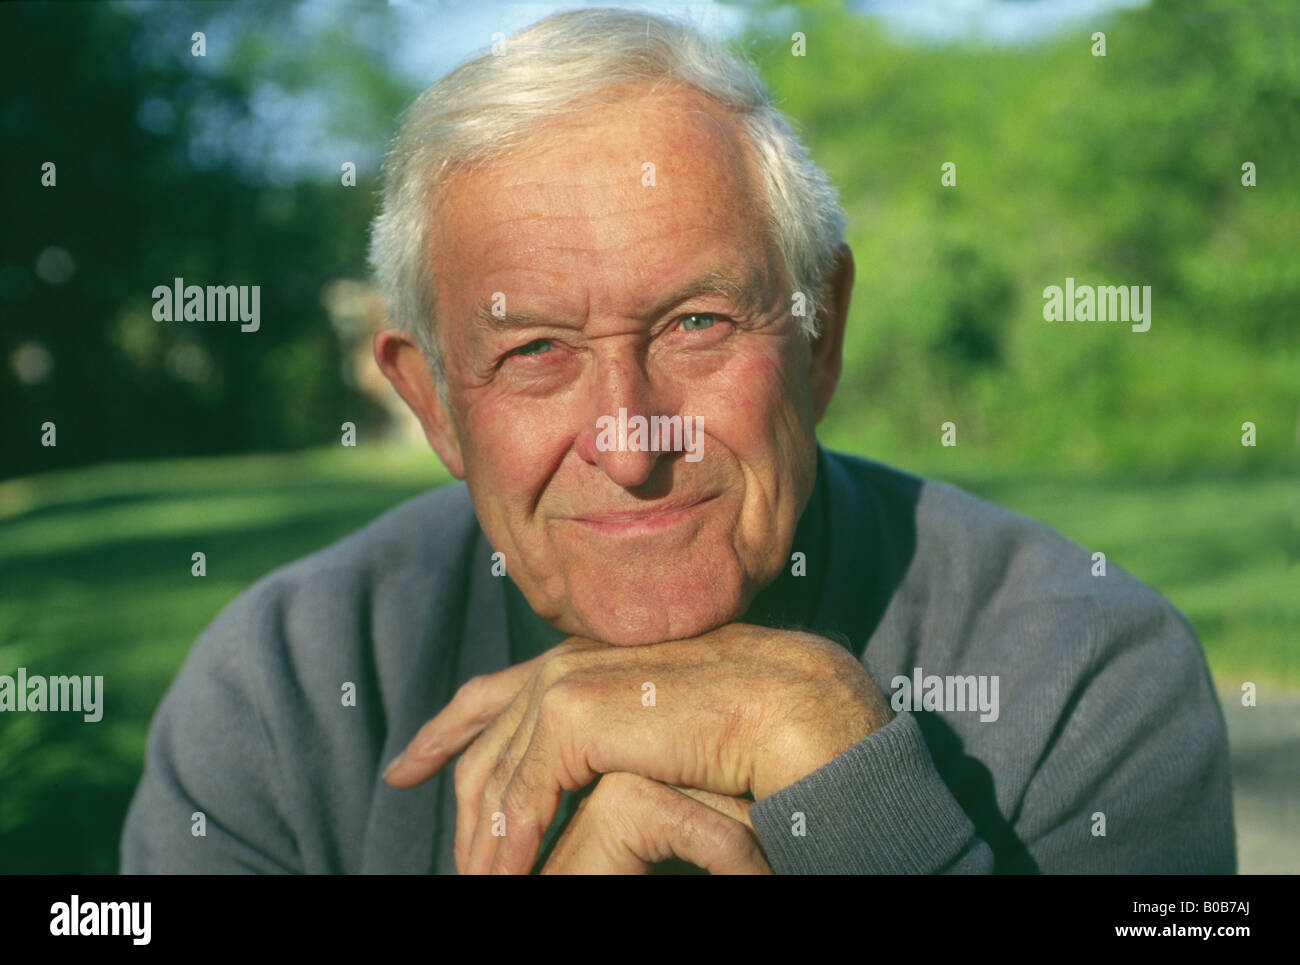 senior man outdoor portrait Stock Photo